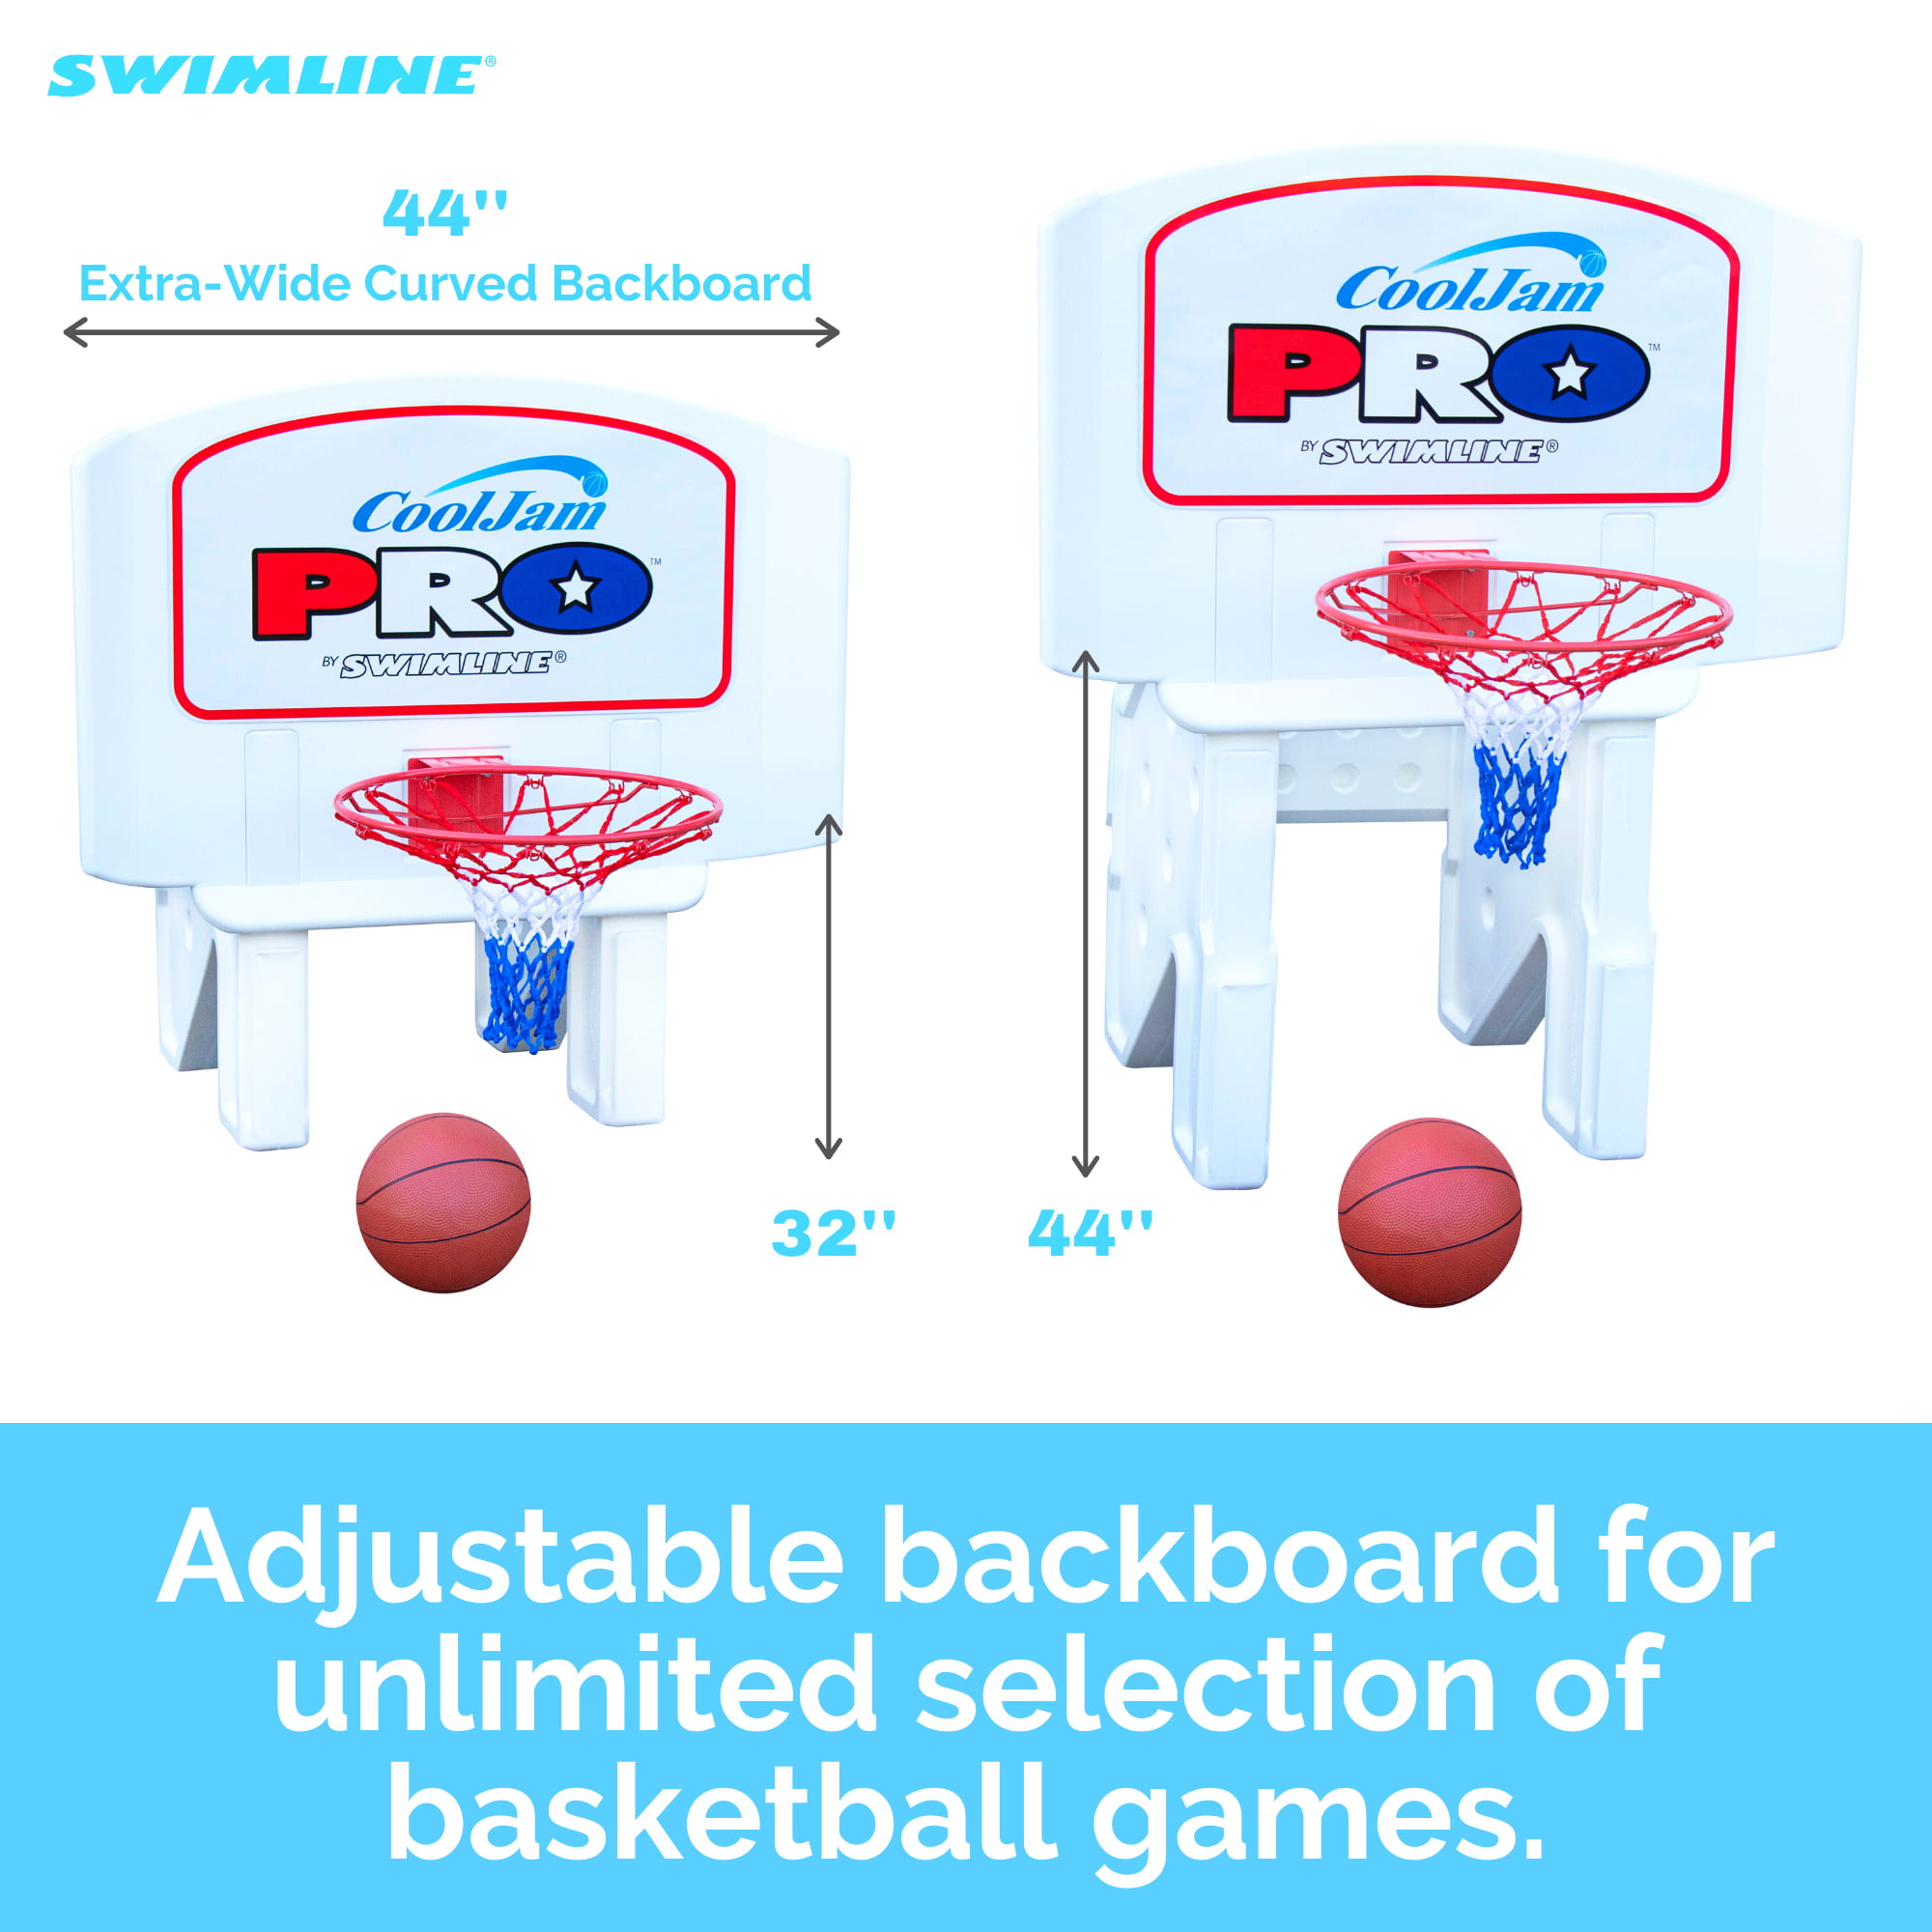 Swimline Cool Jam Pro Poolside Basketball Game w/ Adjustable Backboard - 2